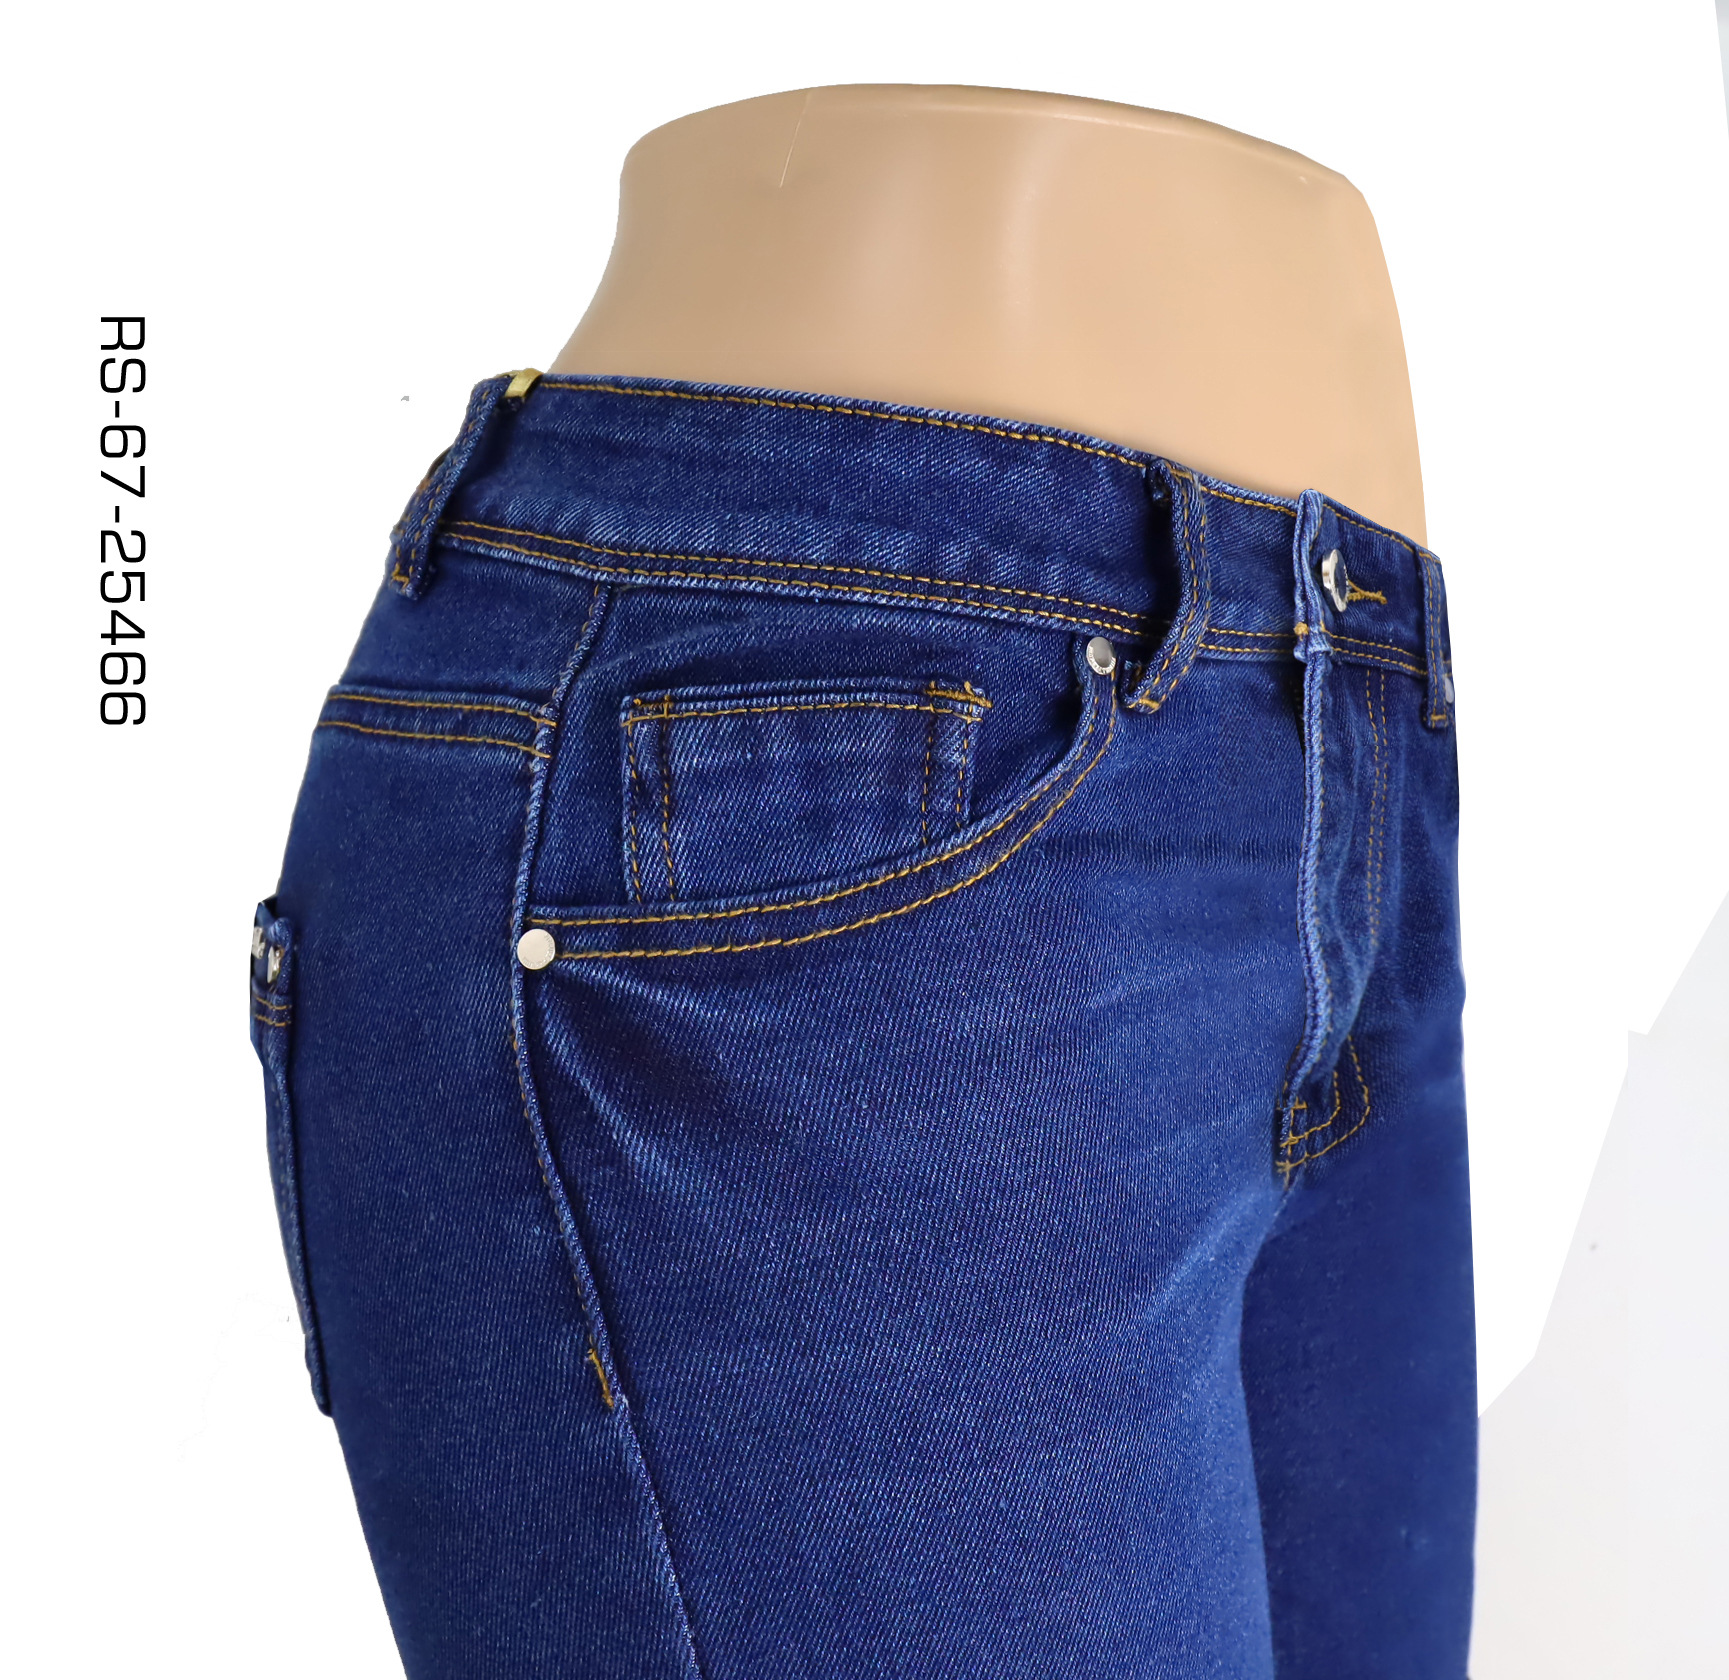 Best jeans for women,top,ladies denim jogger jeans for women  types::different types of